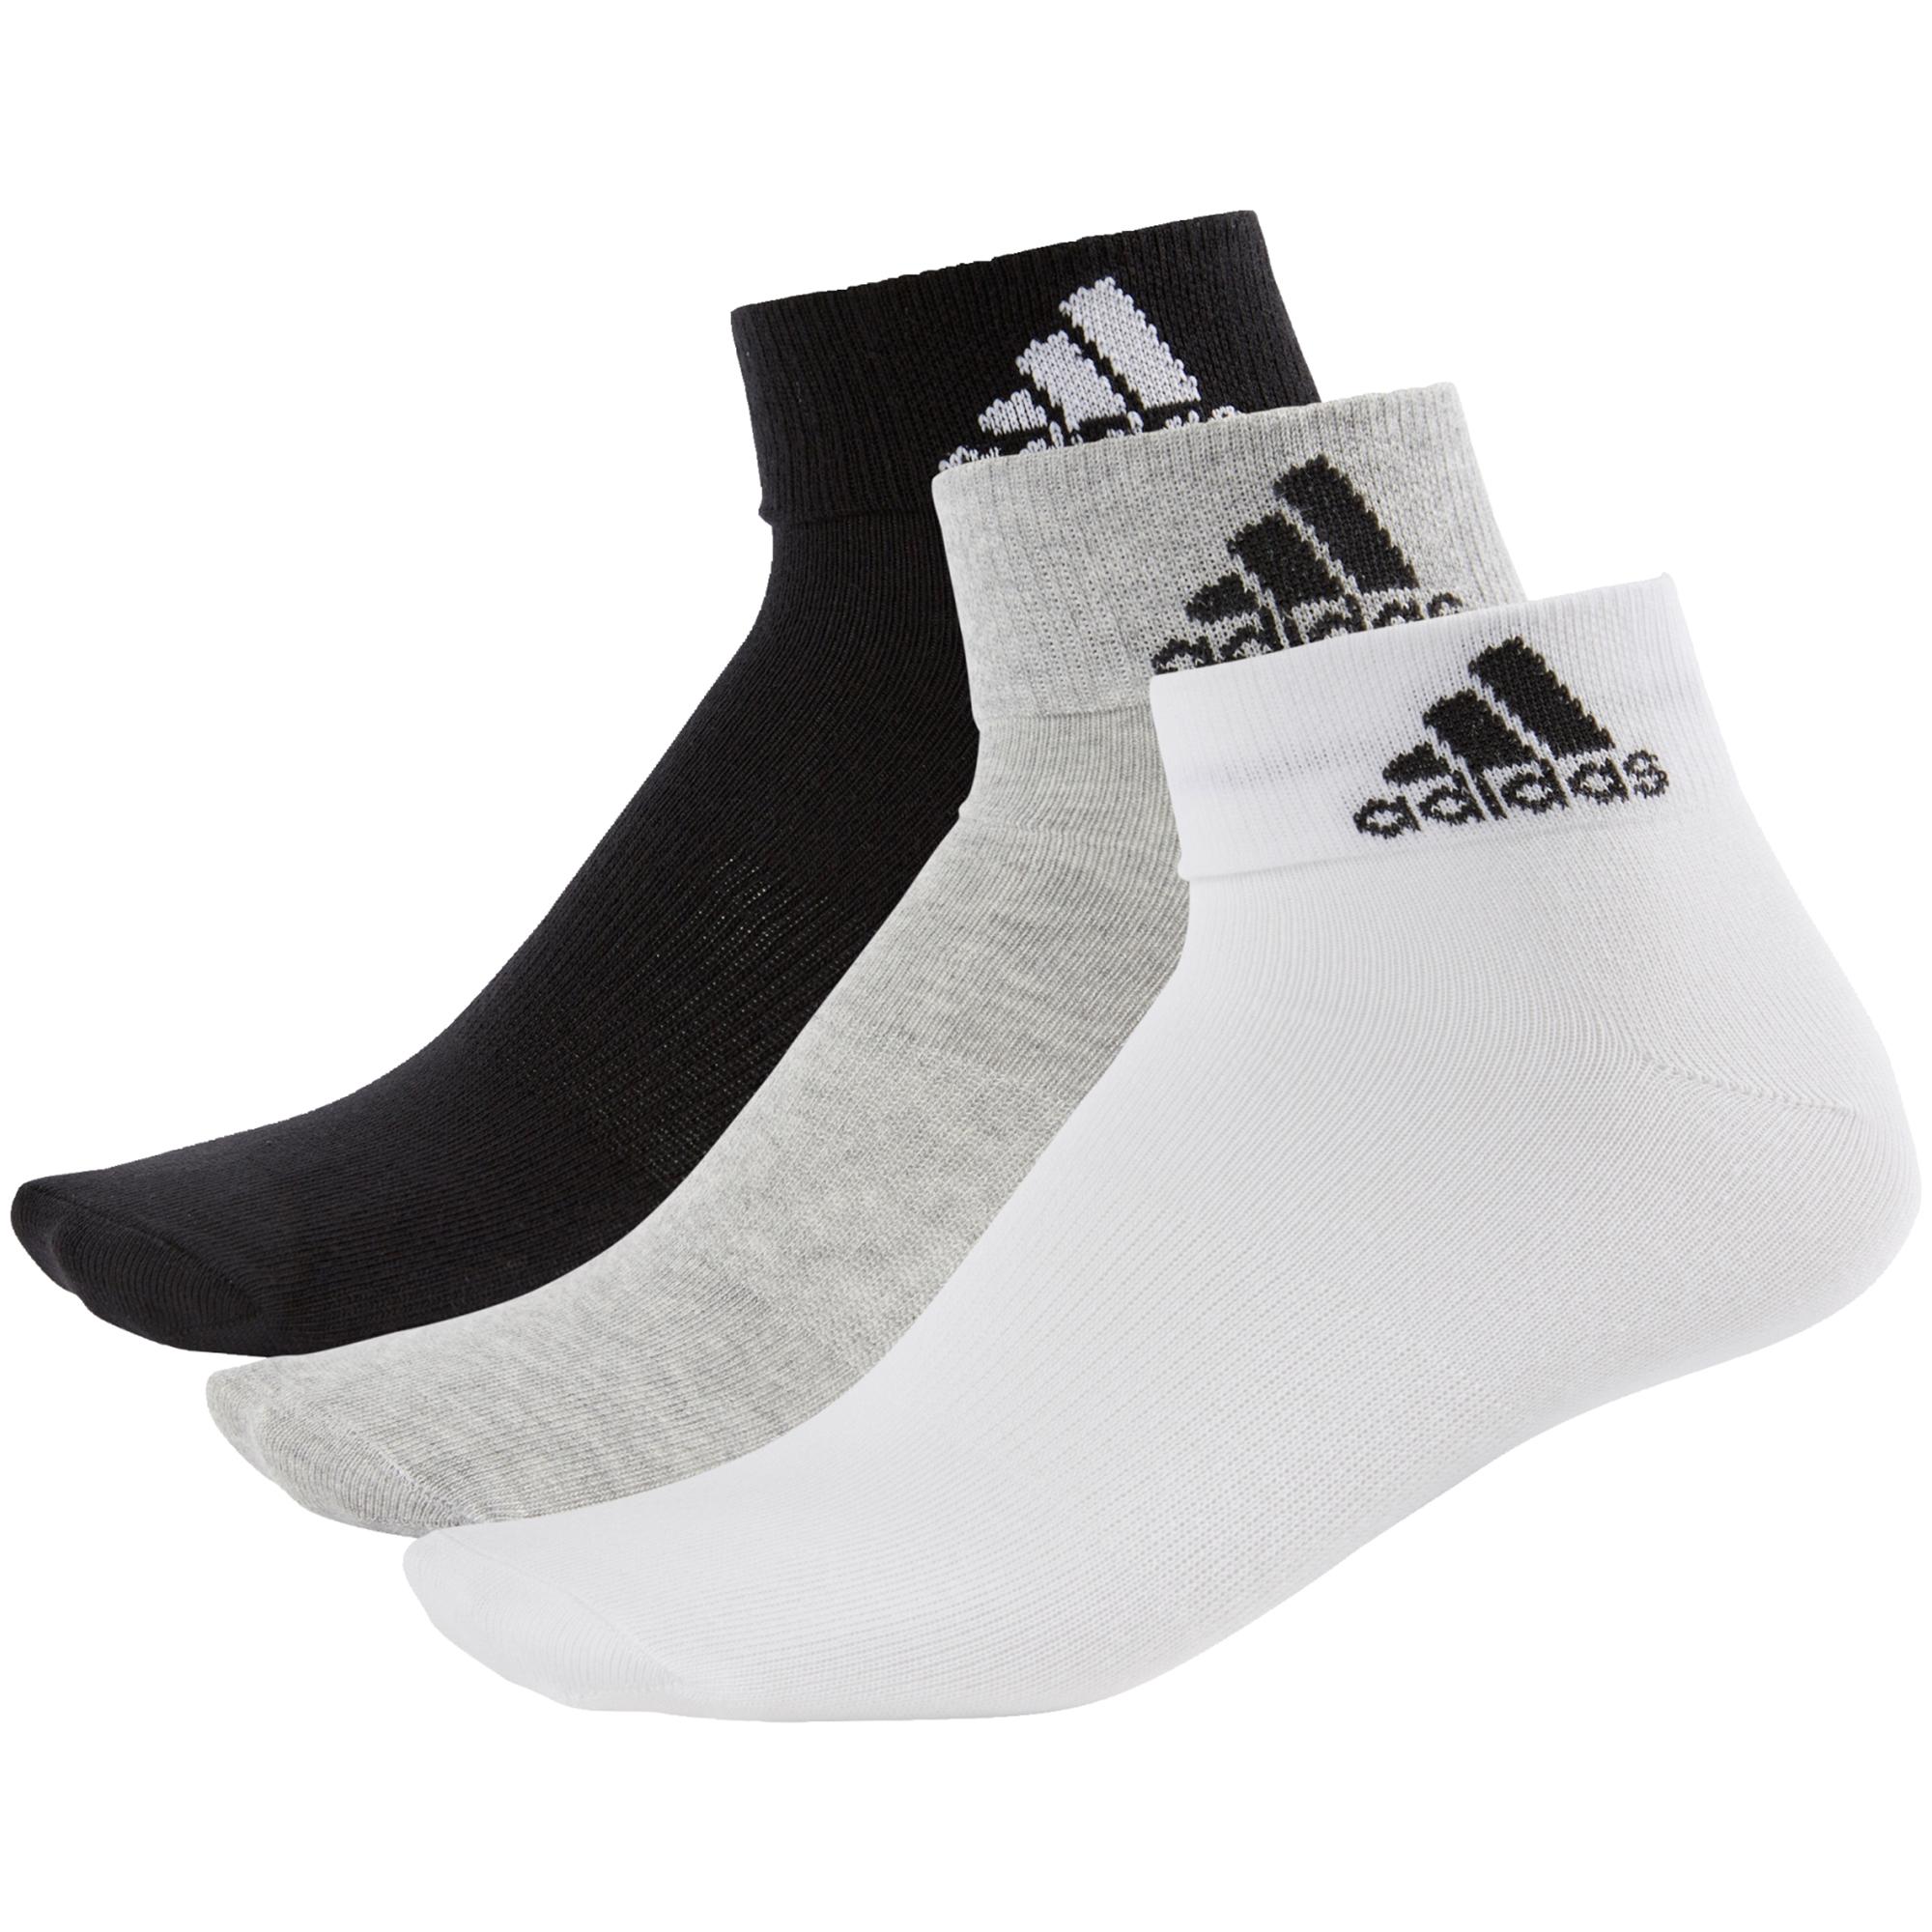 Adidas Performance Ankle Socks (3 Pairs) - White/Black/Grey ...